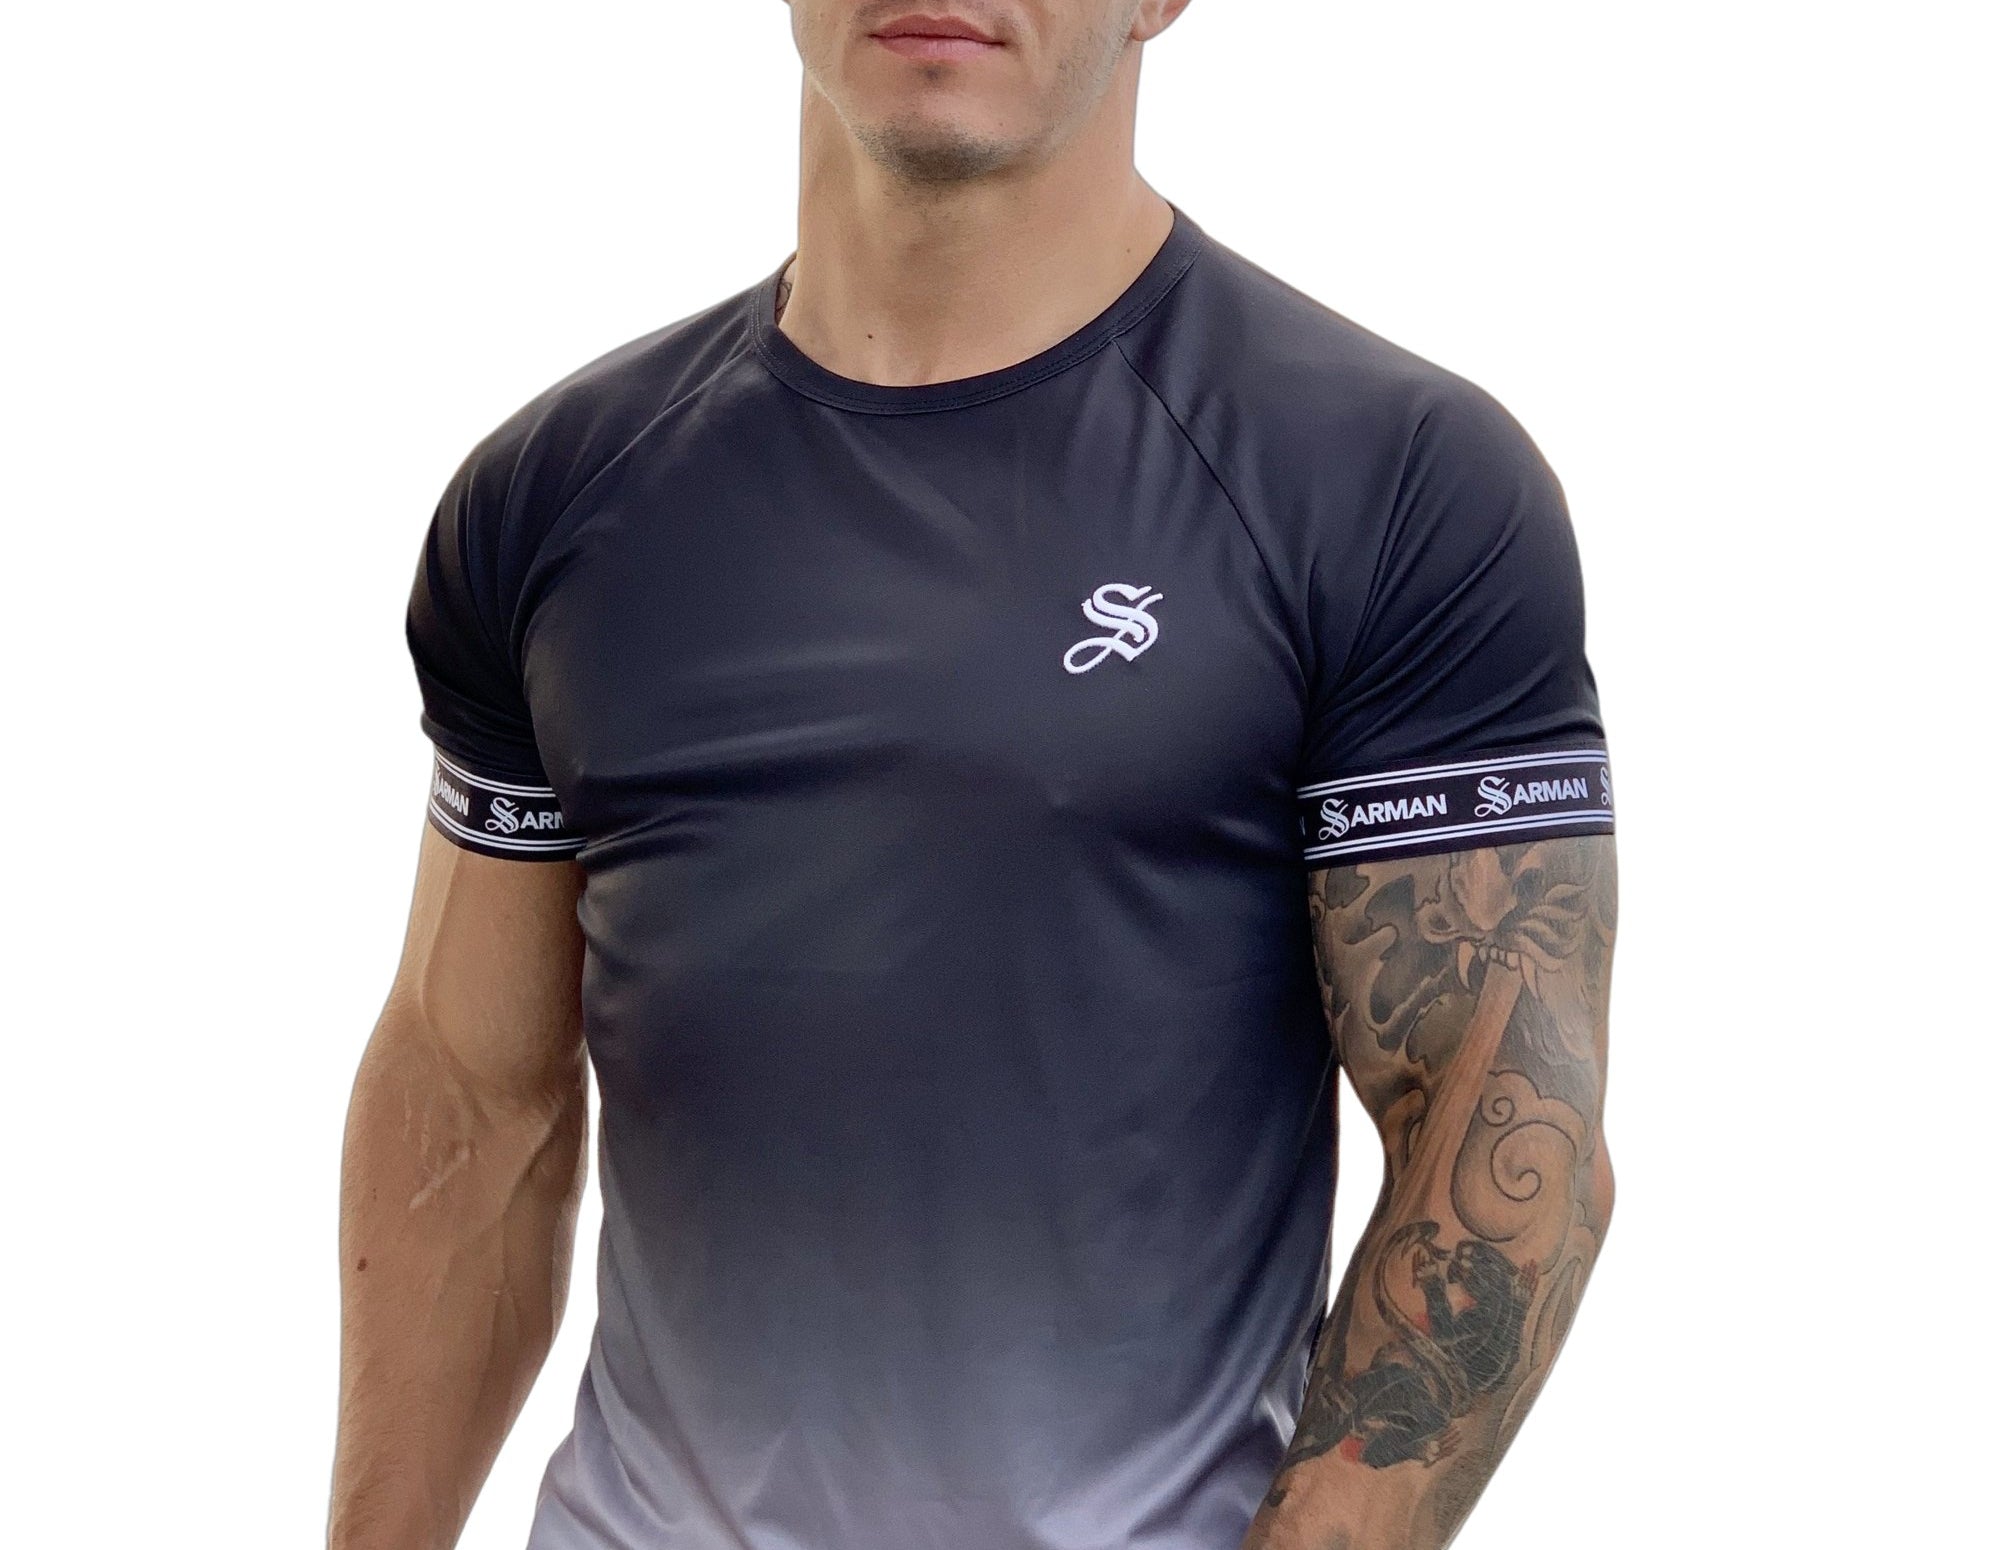 Zoho - Black T-shirt for Men - Sarman Fashion - Wholesale Clothing Fashion Brand for Men from Canada